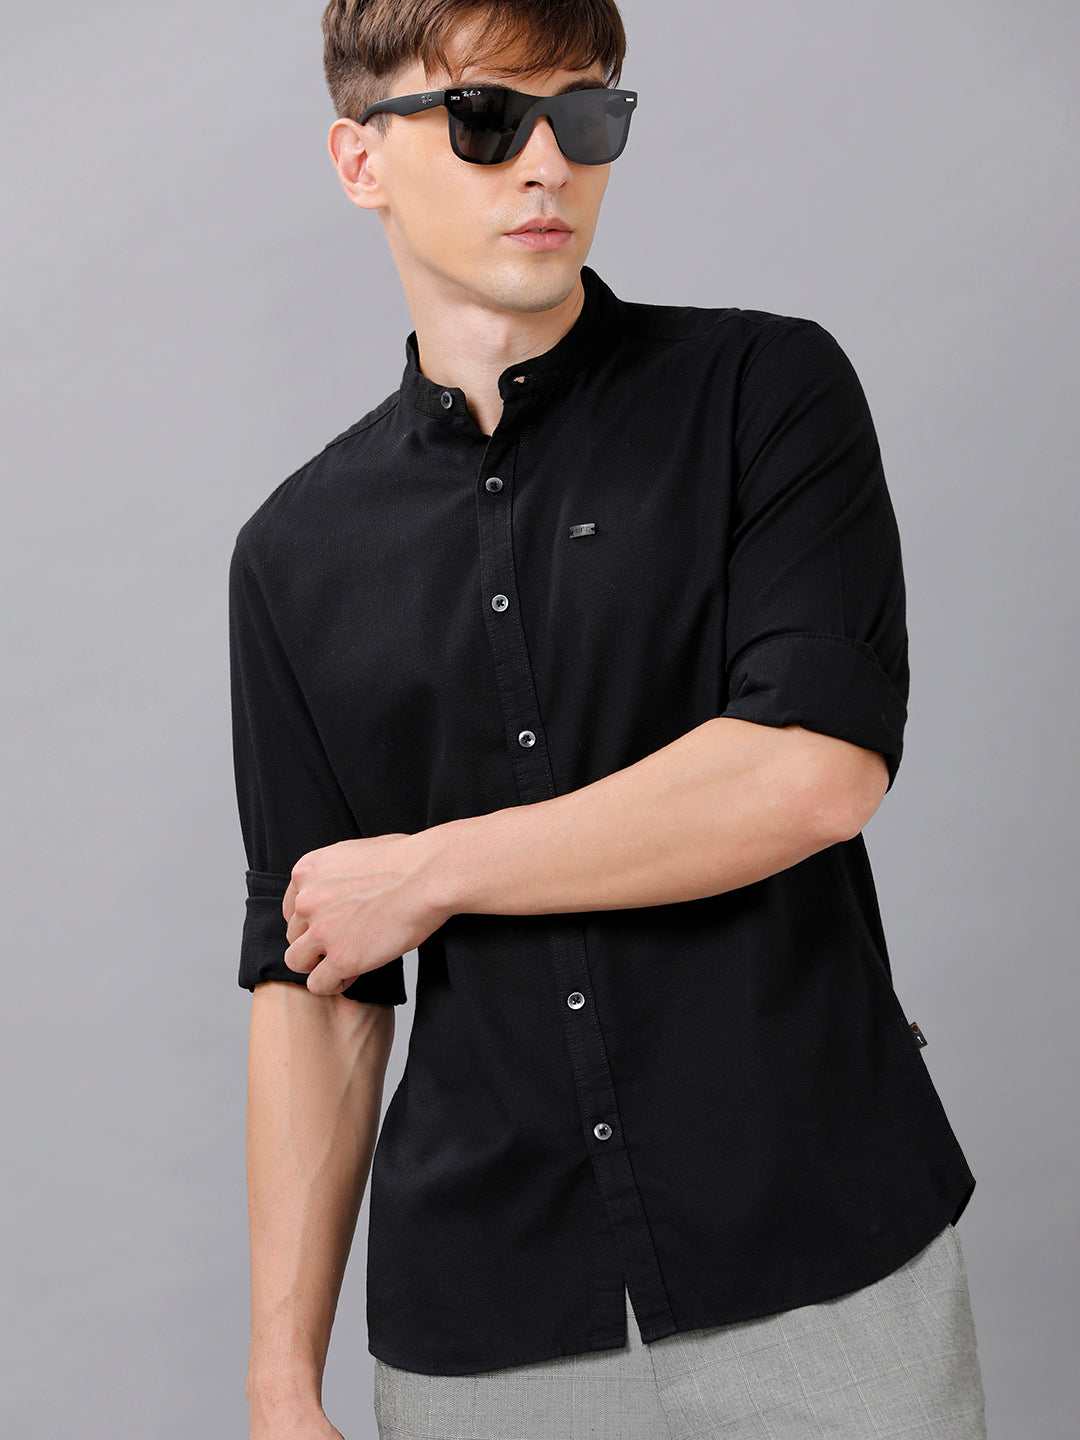 Men's Long Sleeve & Short sleeve T-shirts - Buy Online